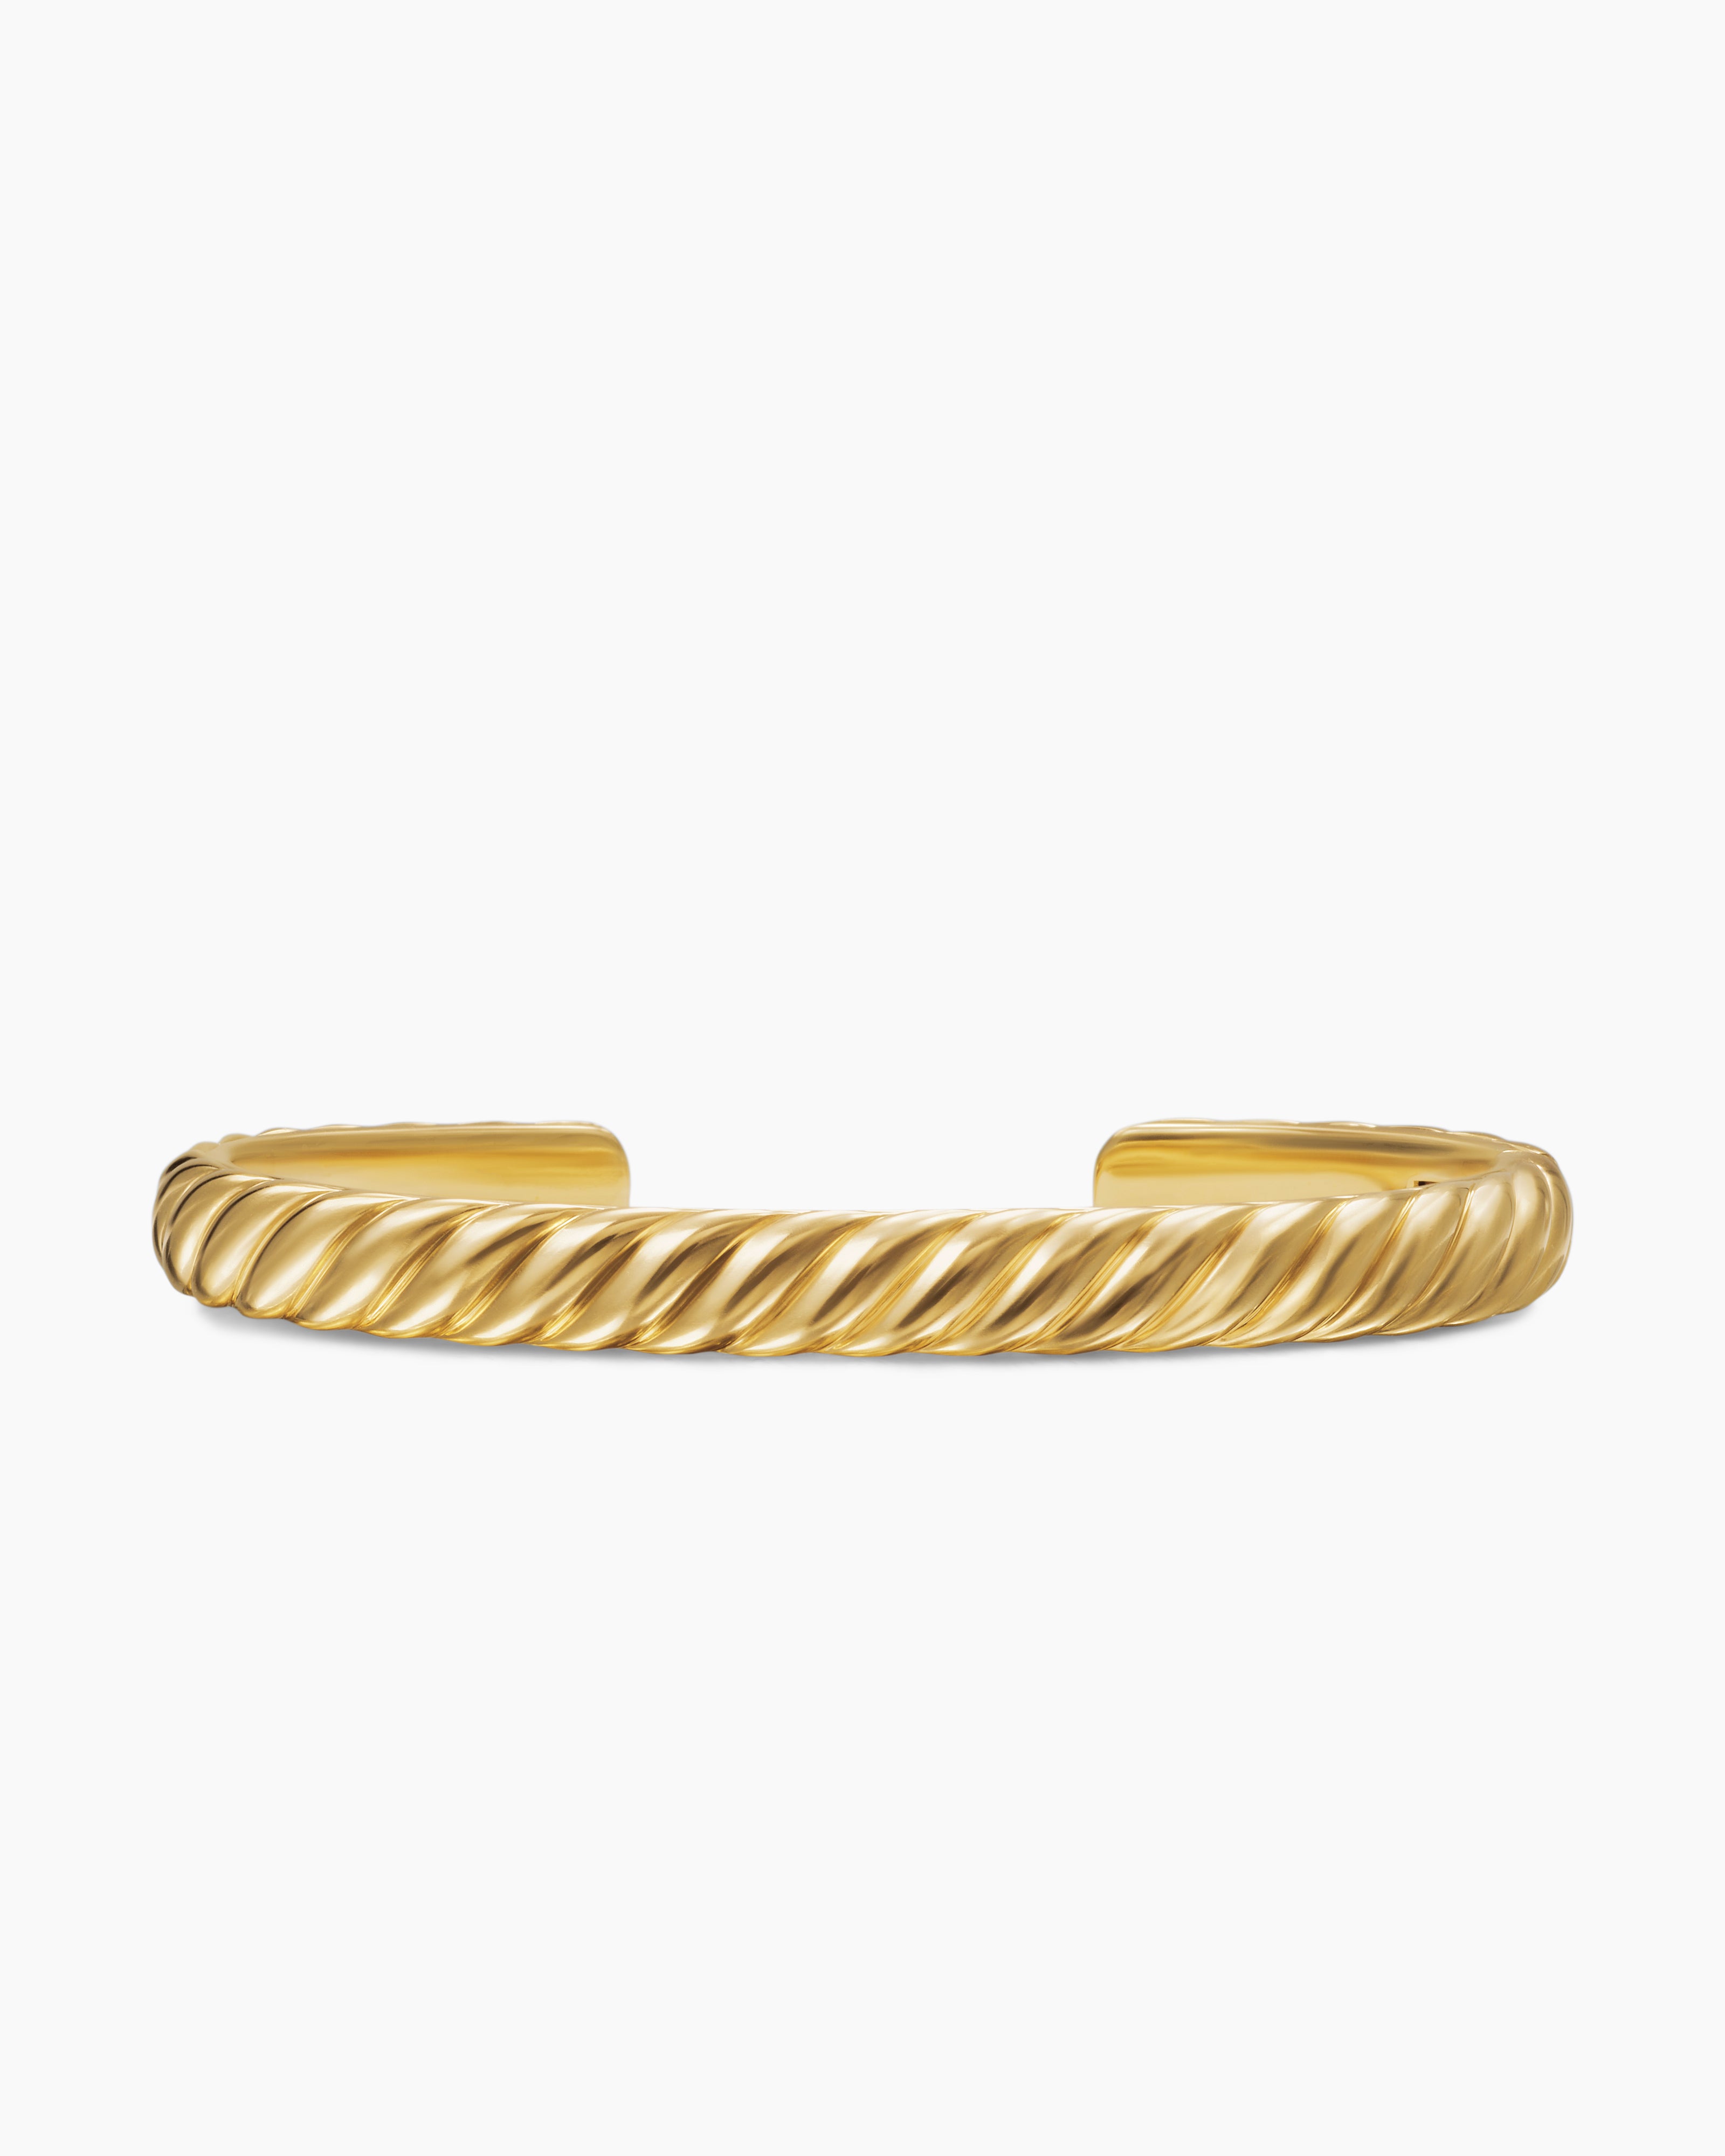 OPK Jewelry Luxury Gold Plated Men's Bracelets Chain Link Bangle Gold  Bracelet | eBay